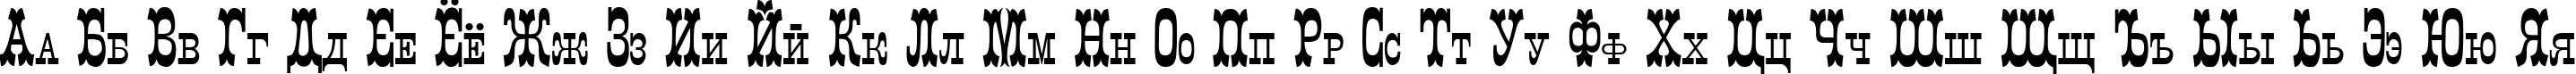 Пример написания русского алфавита шрифтом Italiano Decor